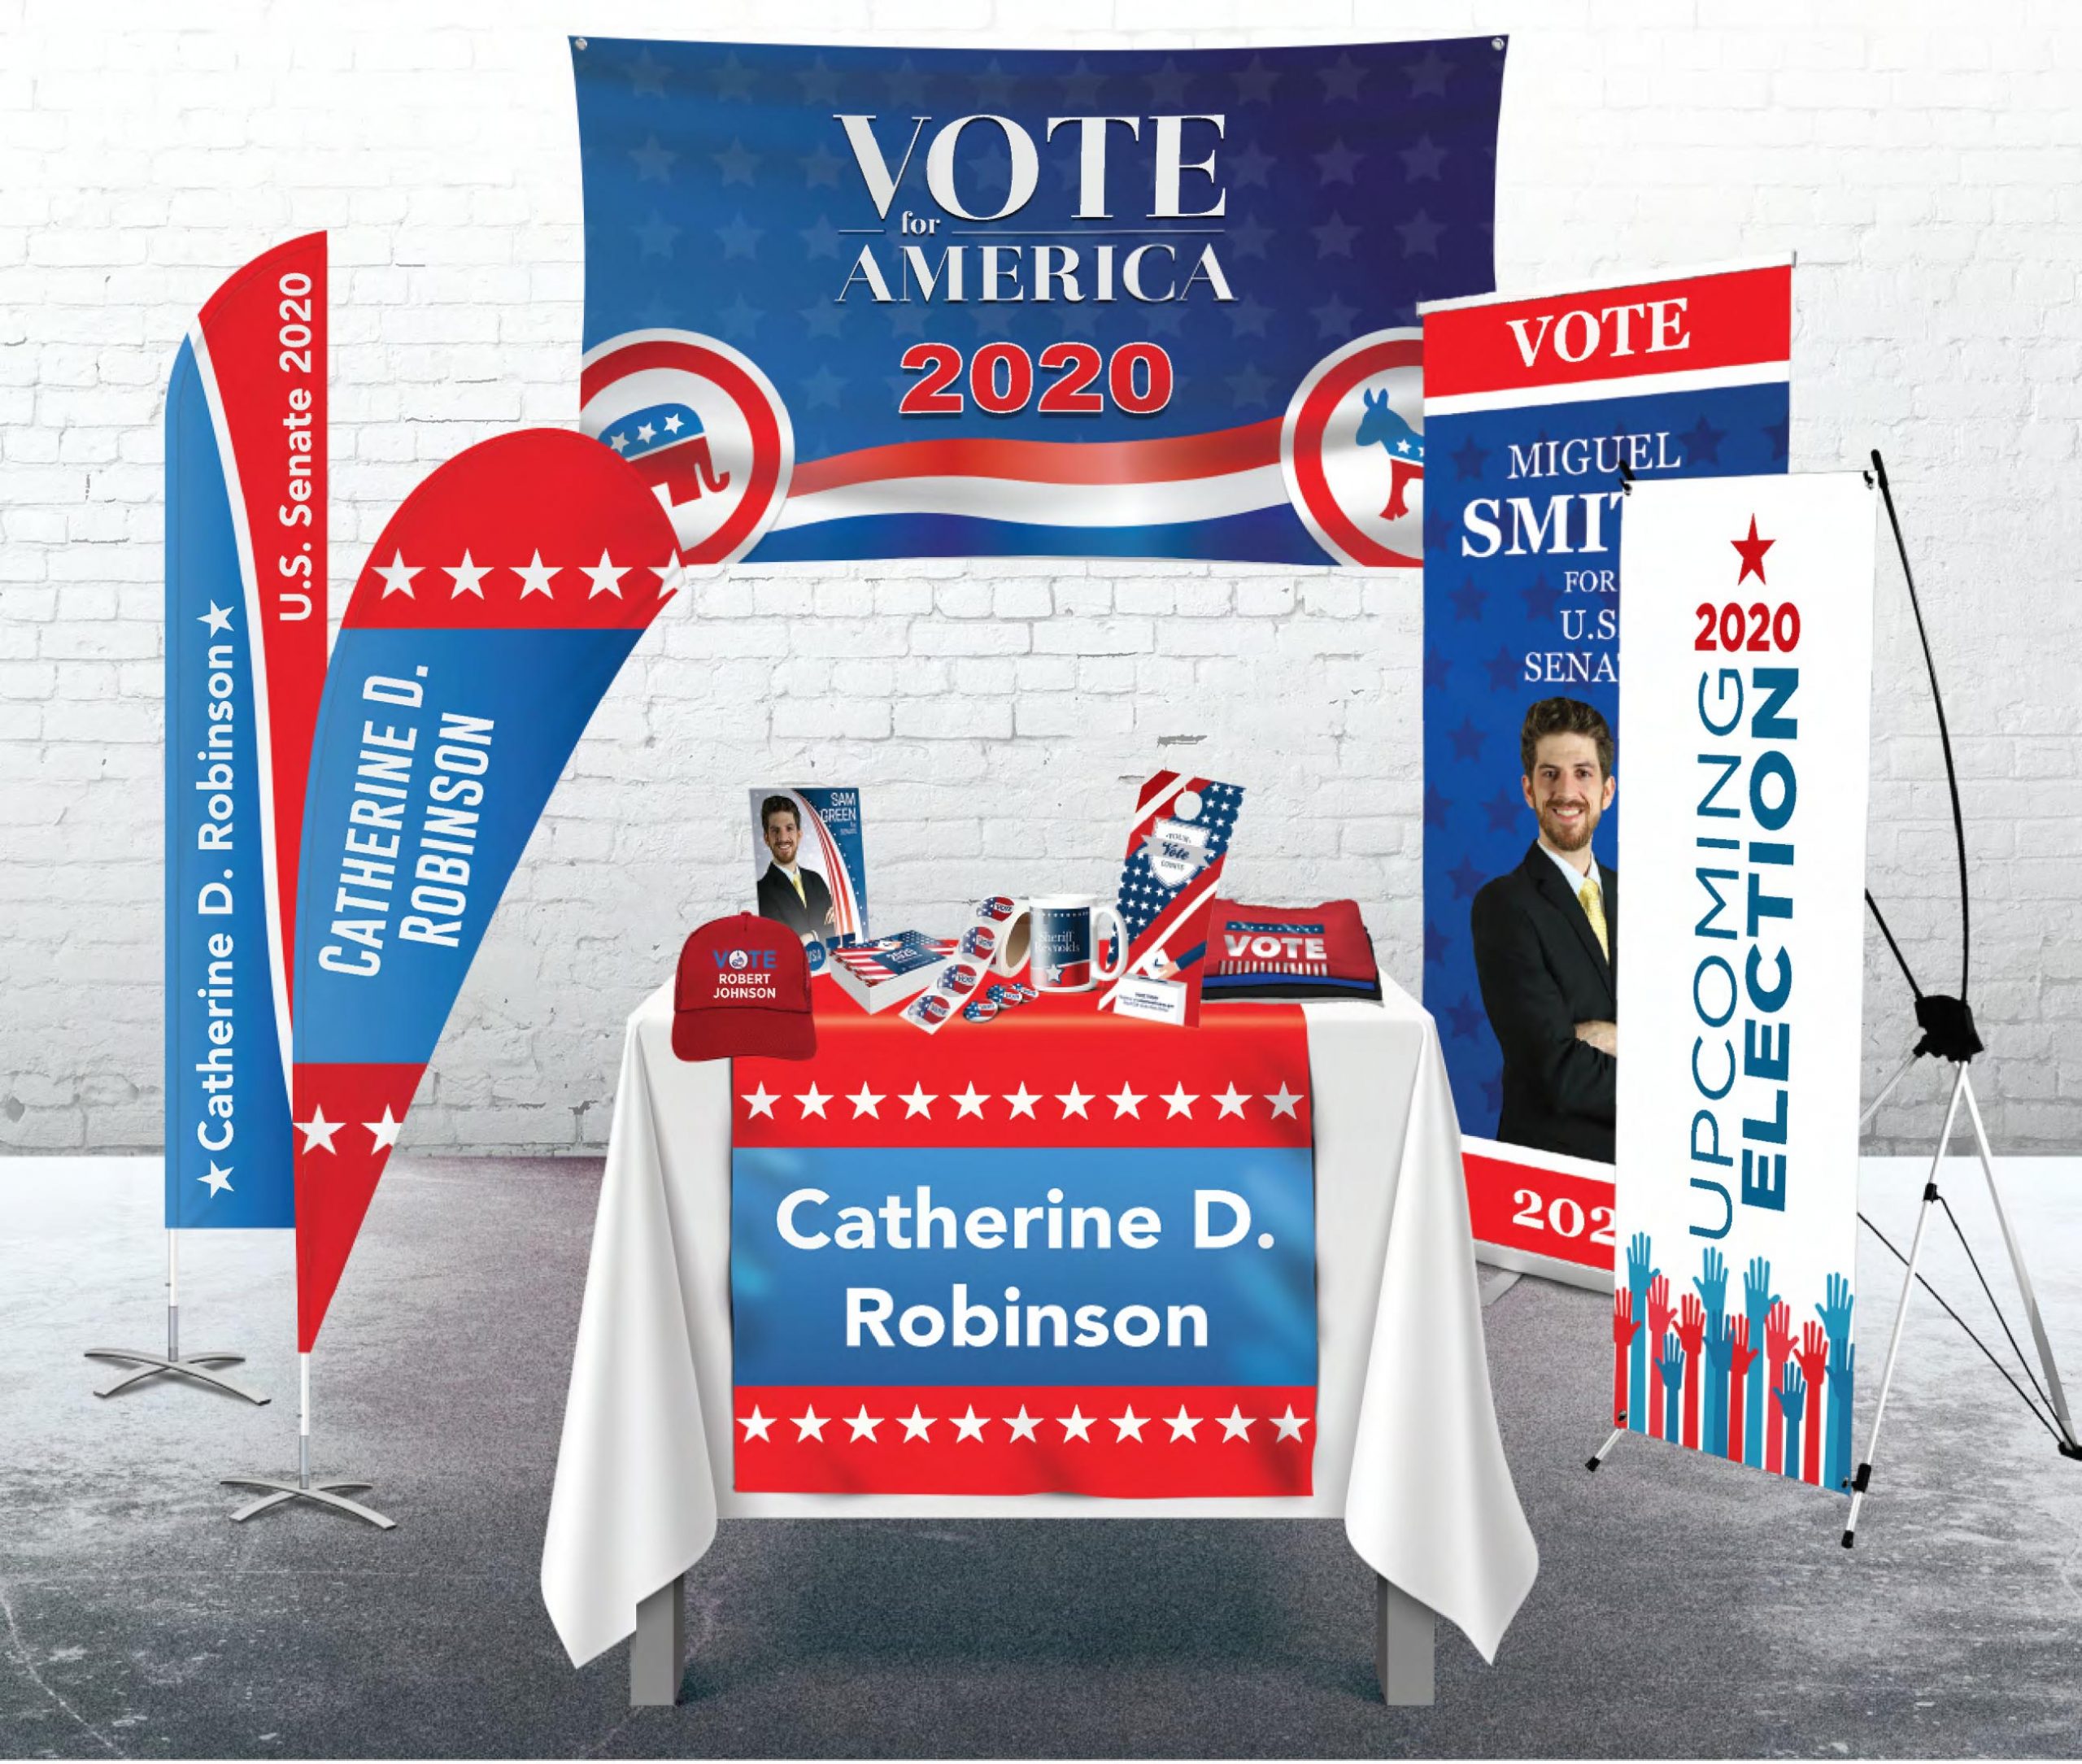 campaign image